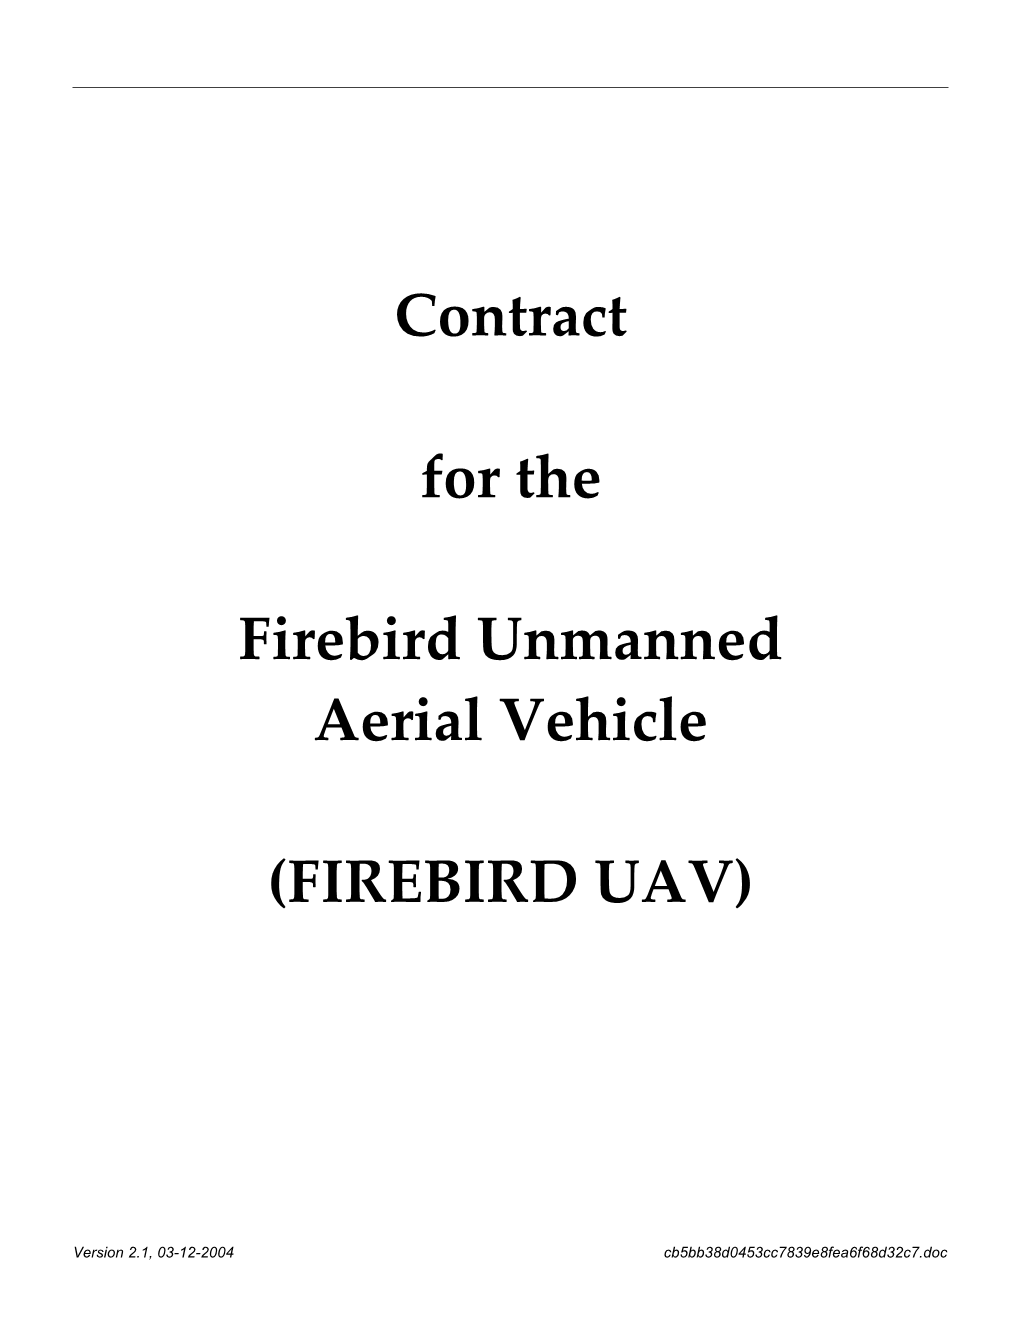 Modify Firebird Production Contract